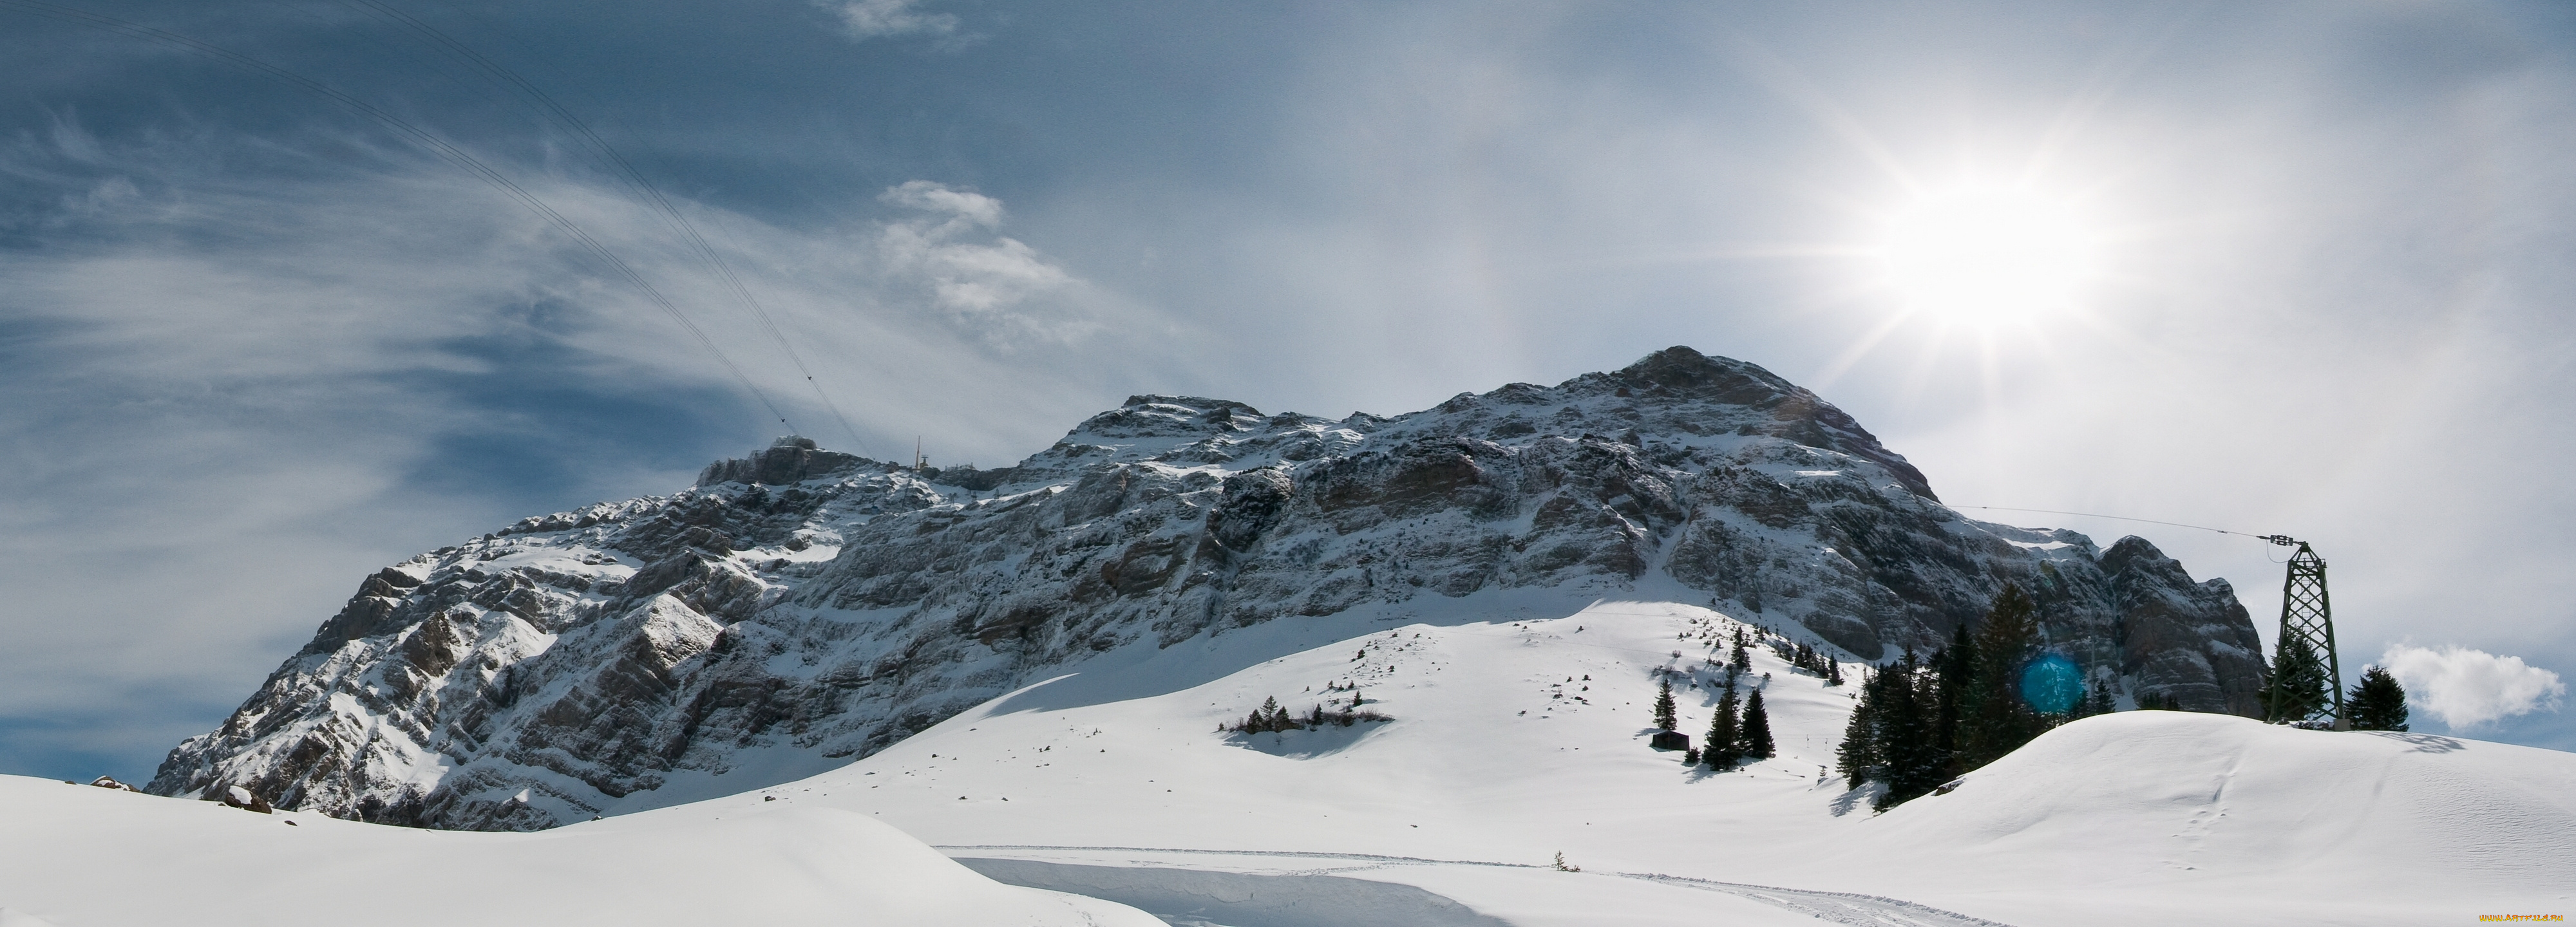 schwagalp, pass, switzerland, природа, горы, снег, горный, перевал, альпы, швейцария, alps